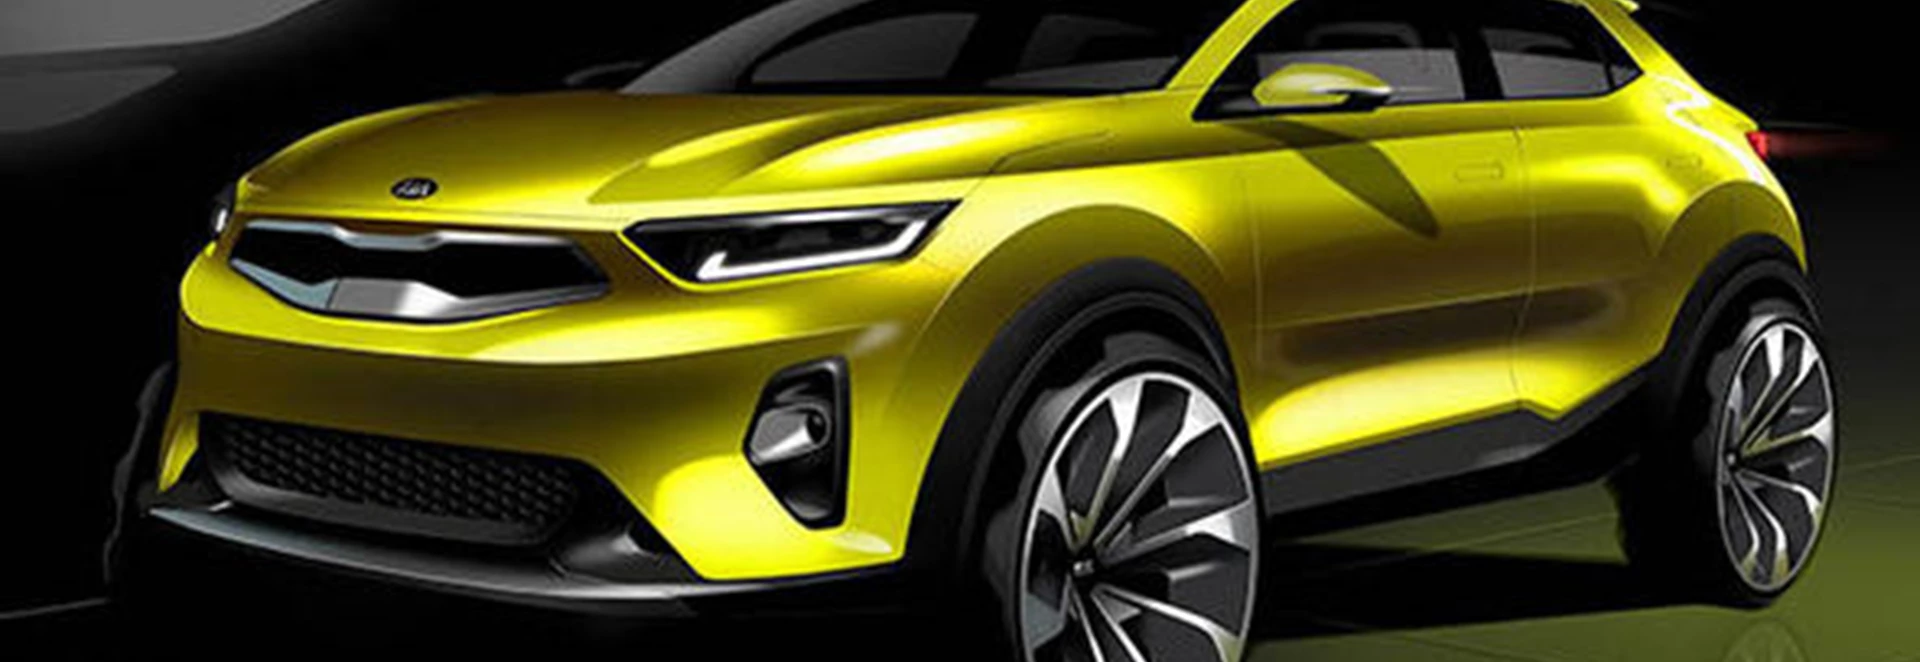 Kia reveals new Stonic mini SUV